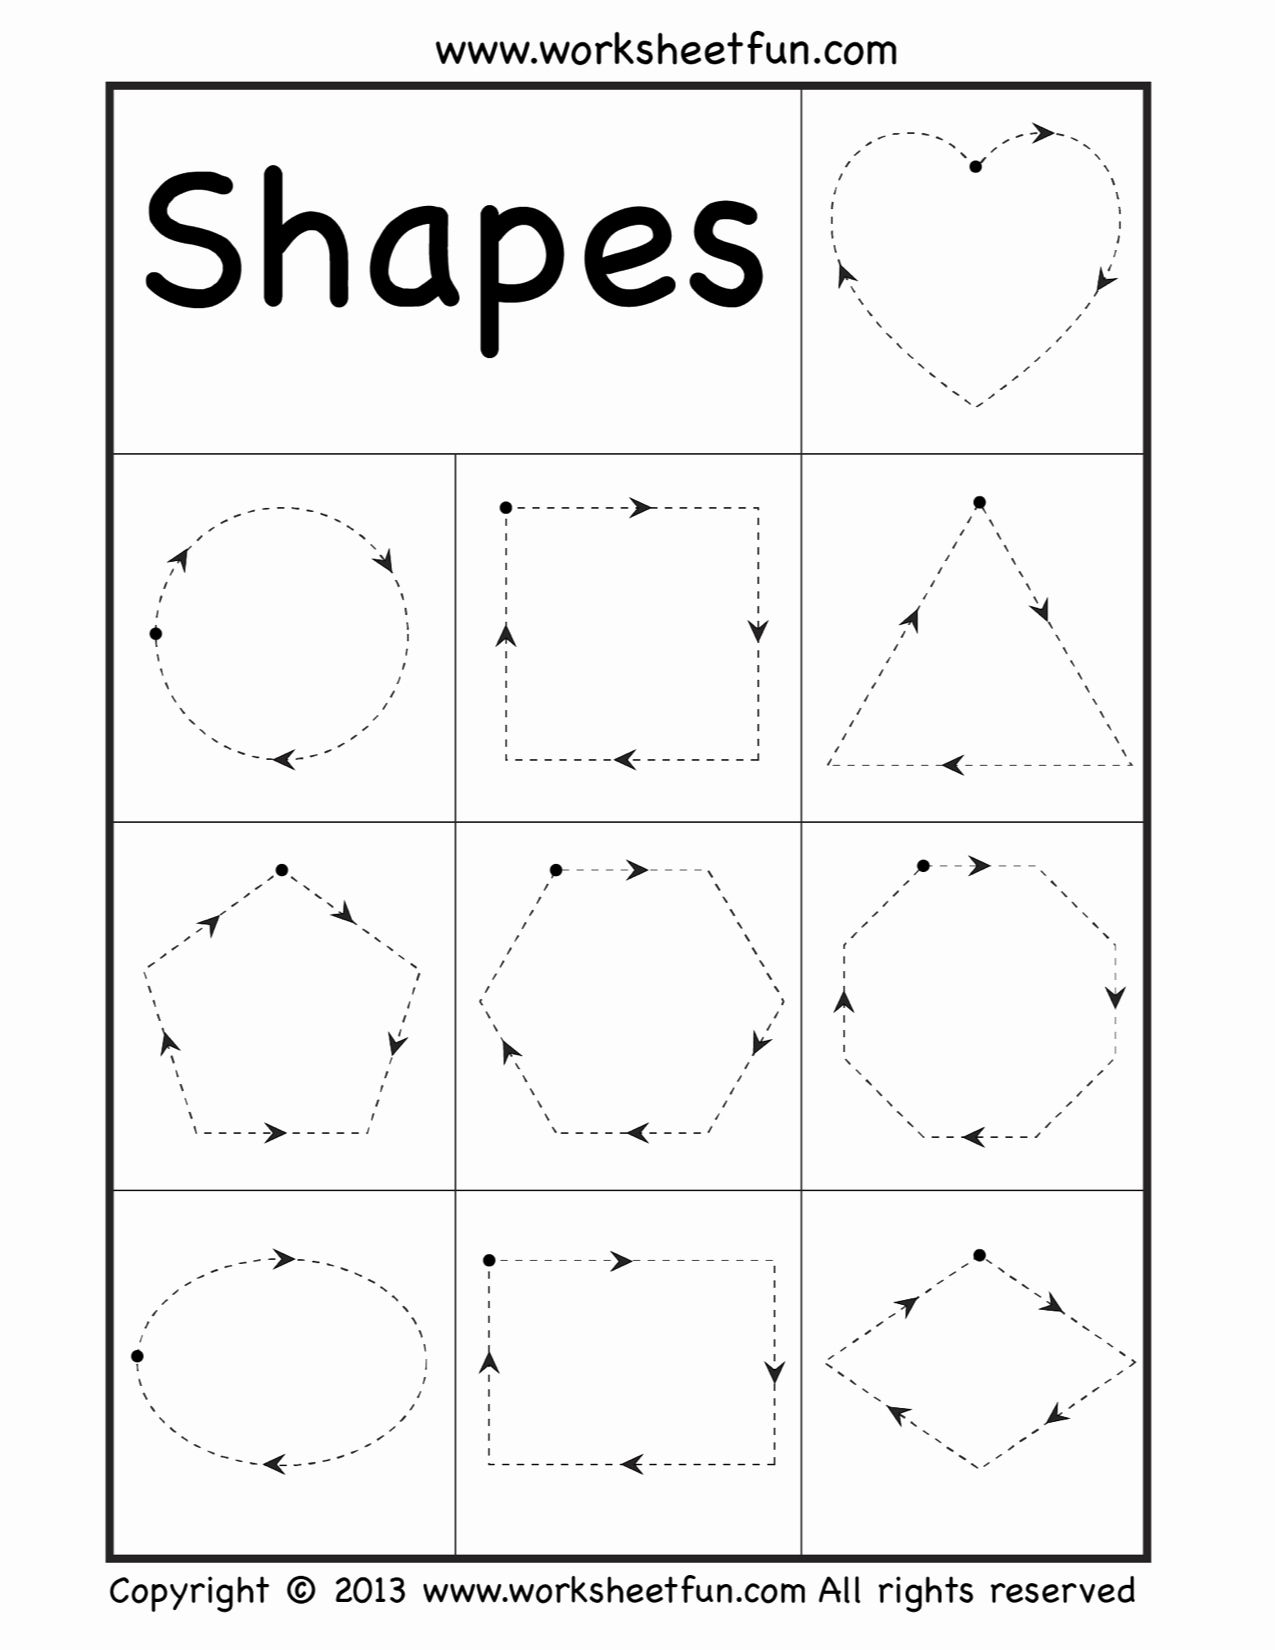 Shape Worksheets For Preschoolers In 2020 | Shape Tracing